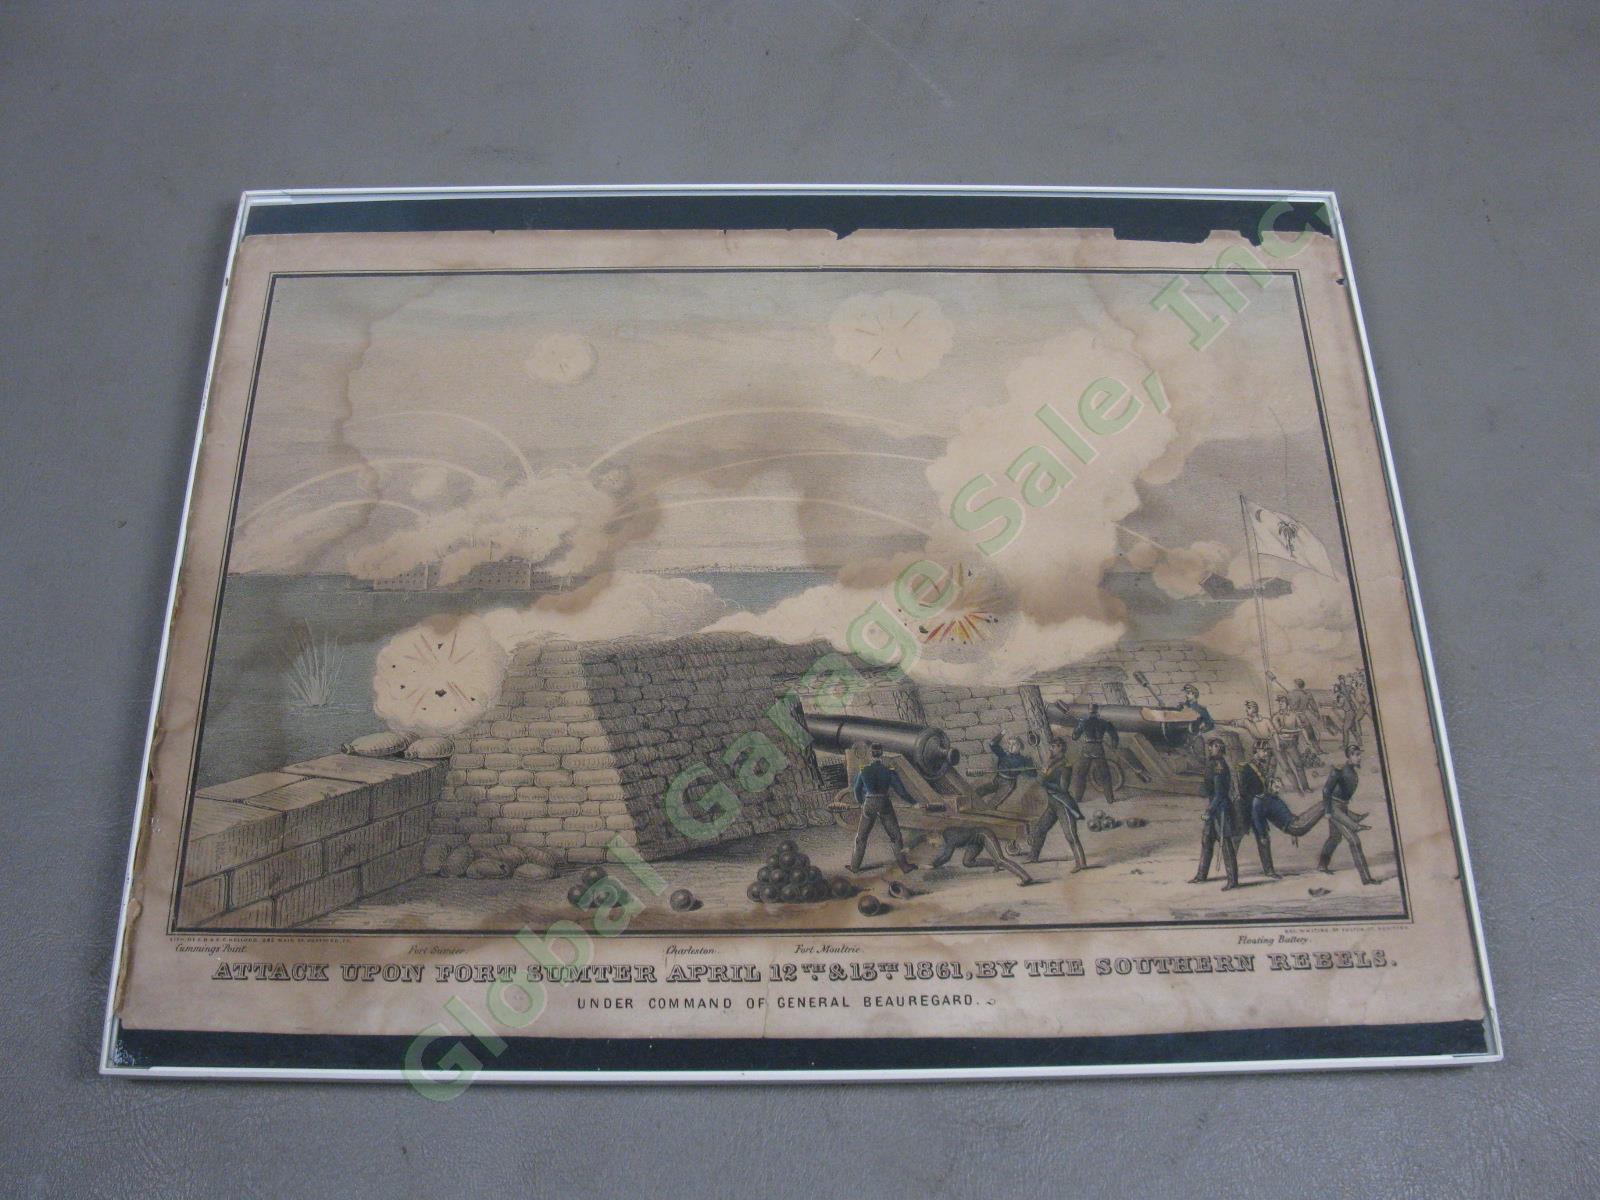 E B C Kellogg Lithograph Attack Upon Fort Sumter April 12 13 1861 Southern Rebel